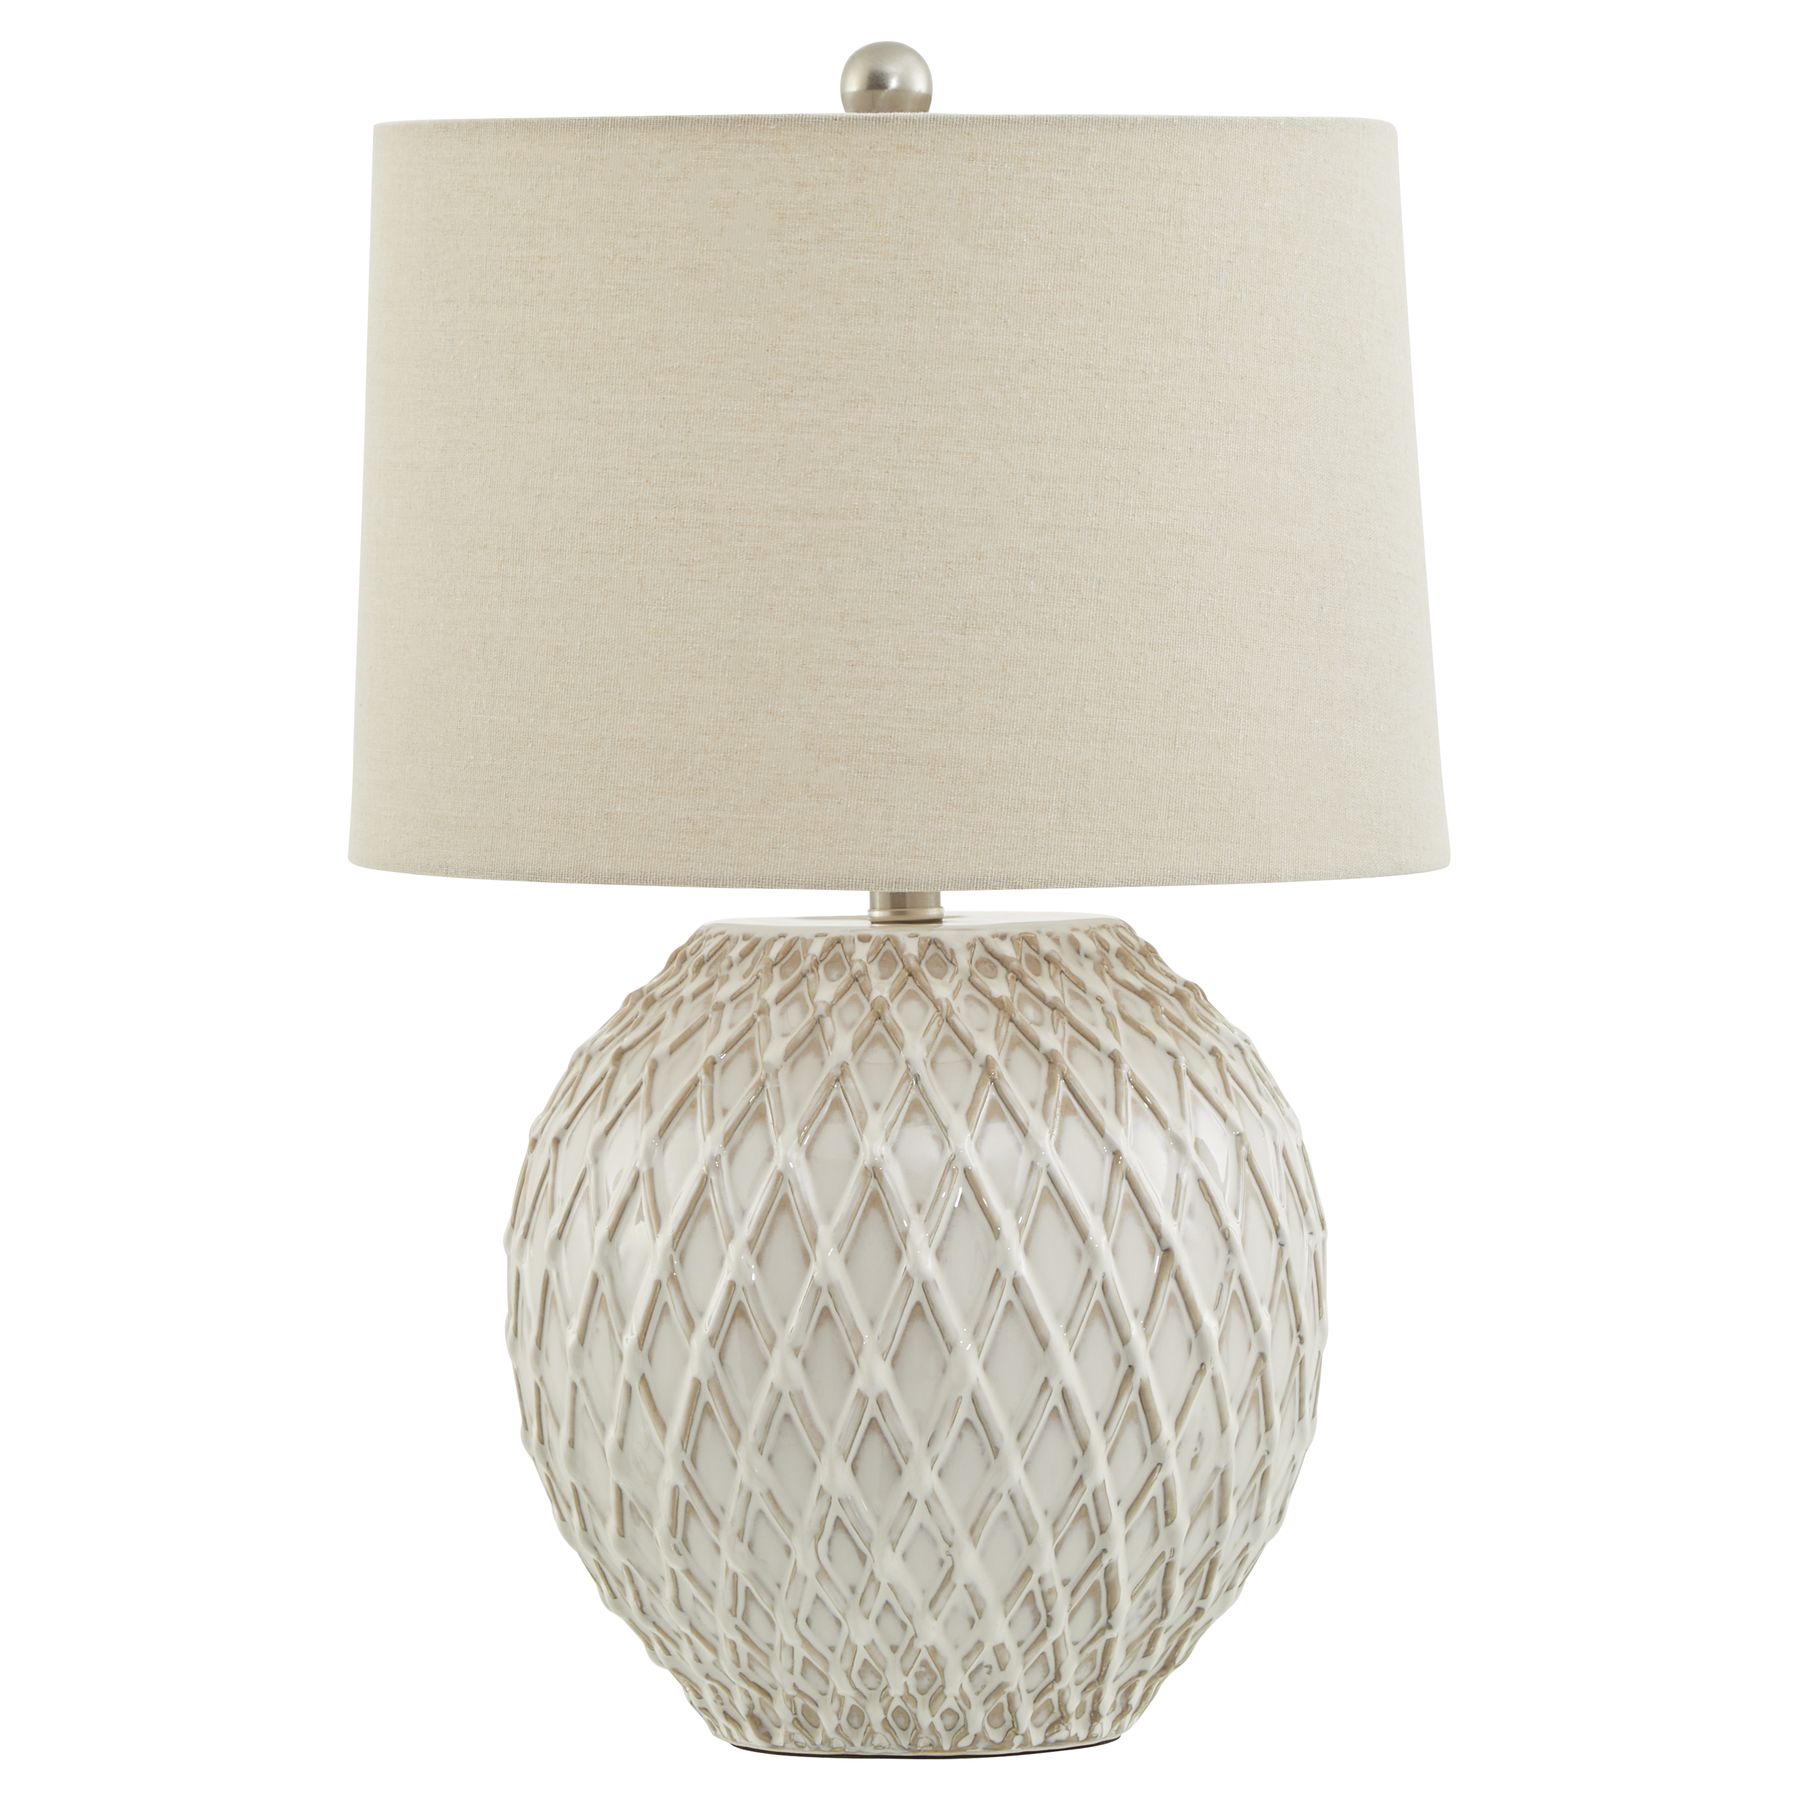 Lattice Ceramic Table Lamp With Linen Shade - Image 1